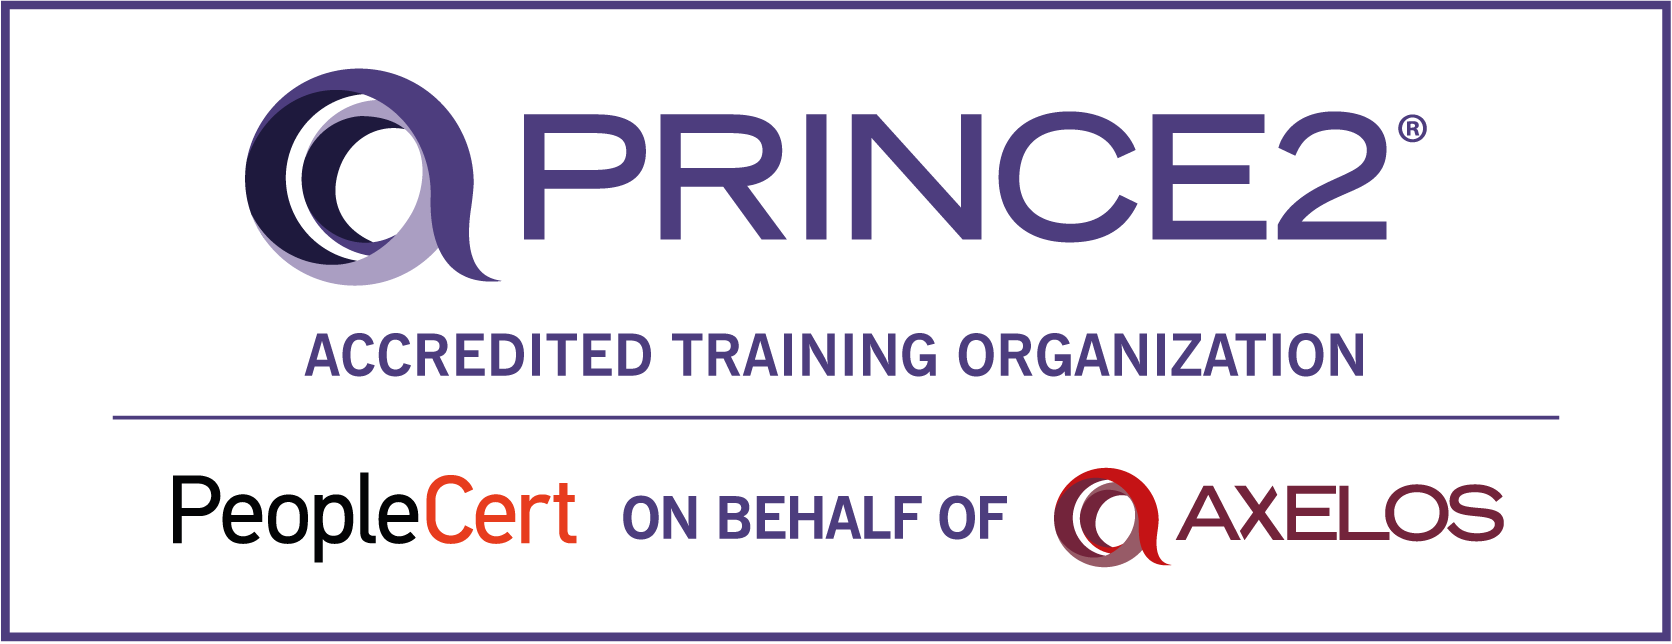 prince2 practitioner, prince2 practitioner certification, prince2 practitioner training, prince2 practitioner exam, prince2 practitioner course